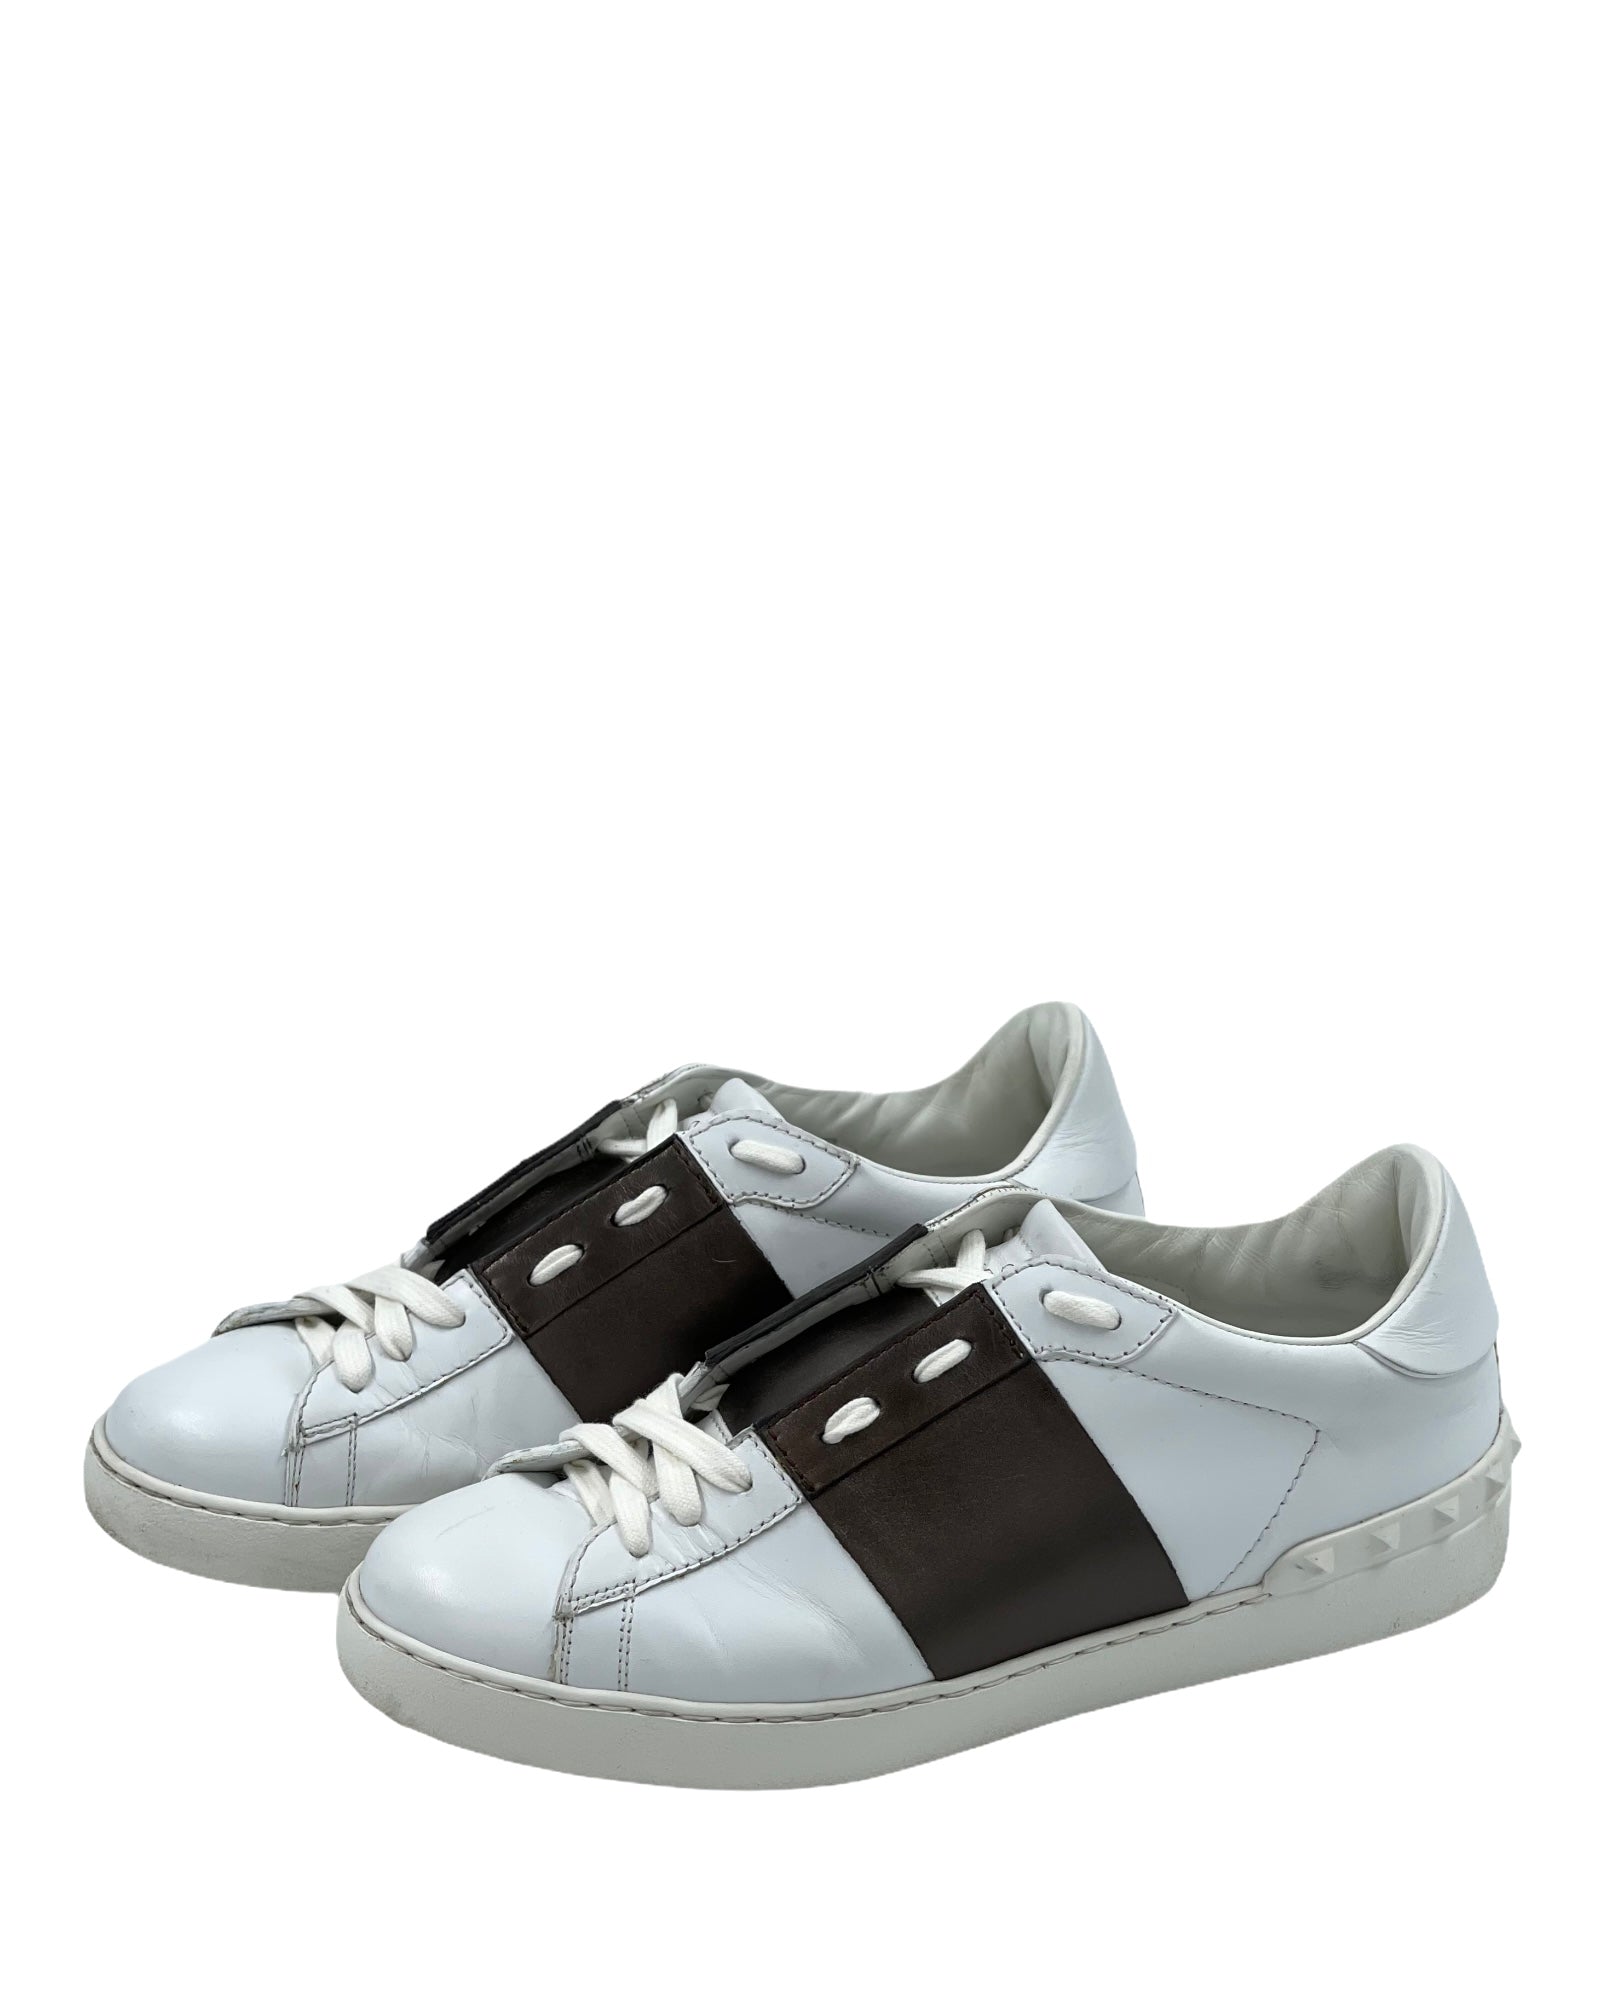 Valentino White/Mountain View Leather Open Sneakers Size 41 